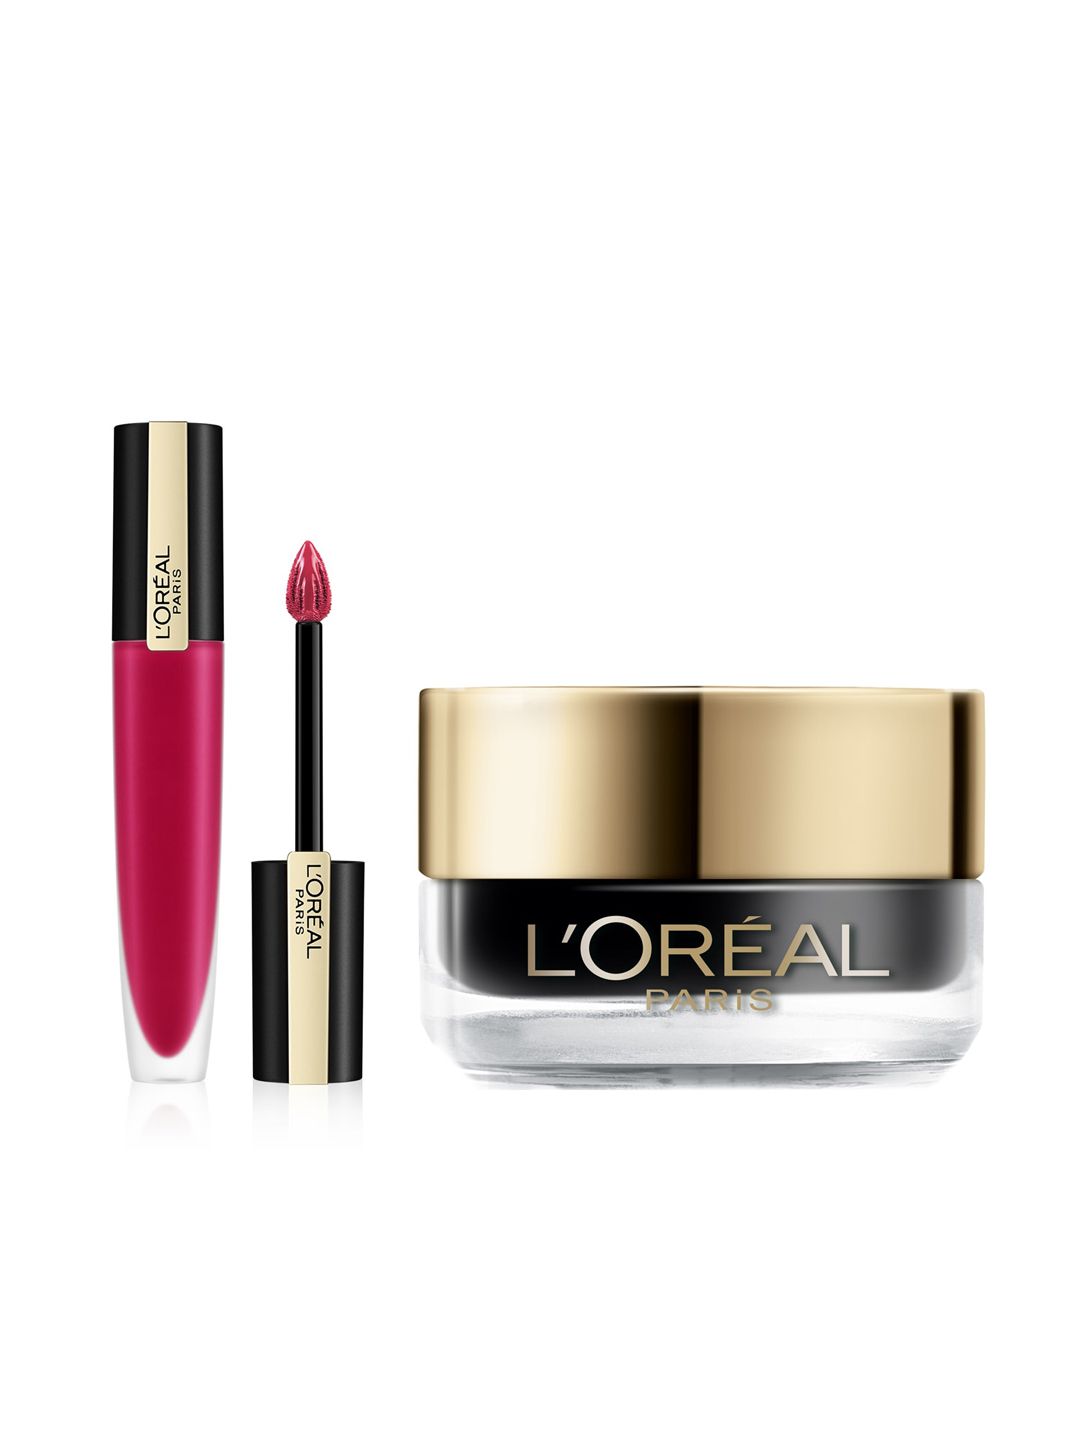 L'Oreal Paris Set of Eyeliner & Lipstick Price in India